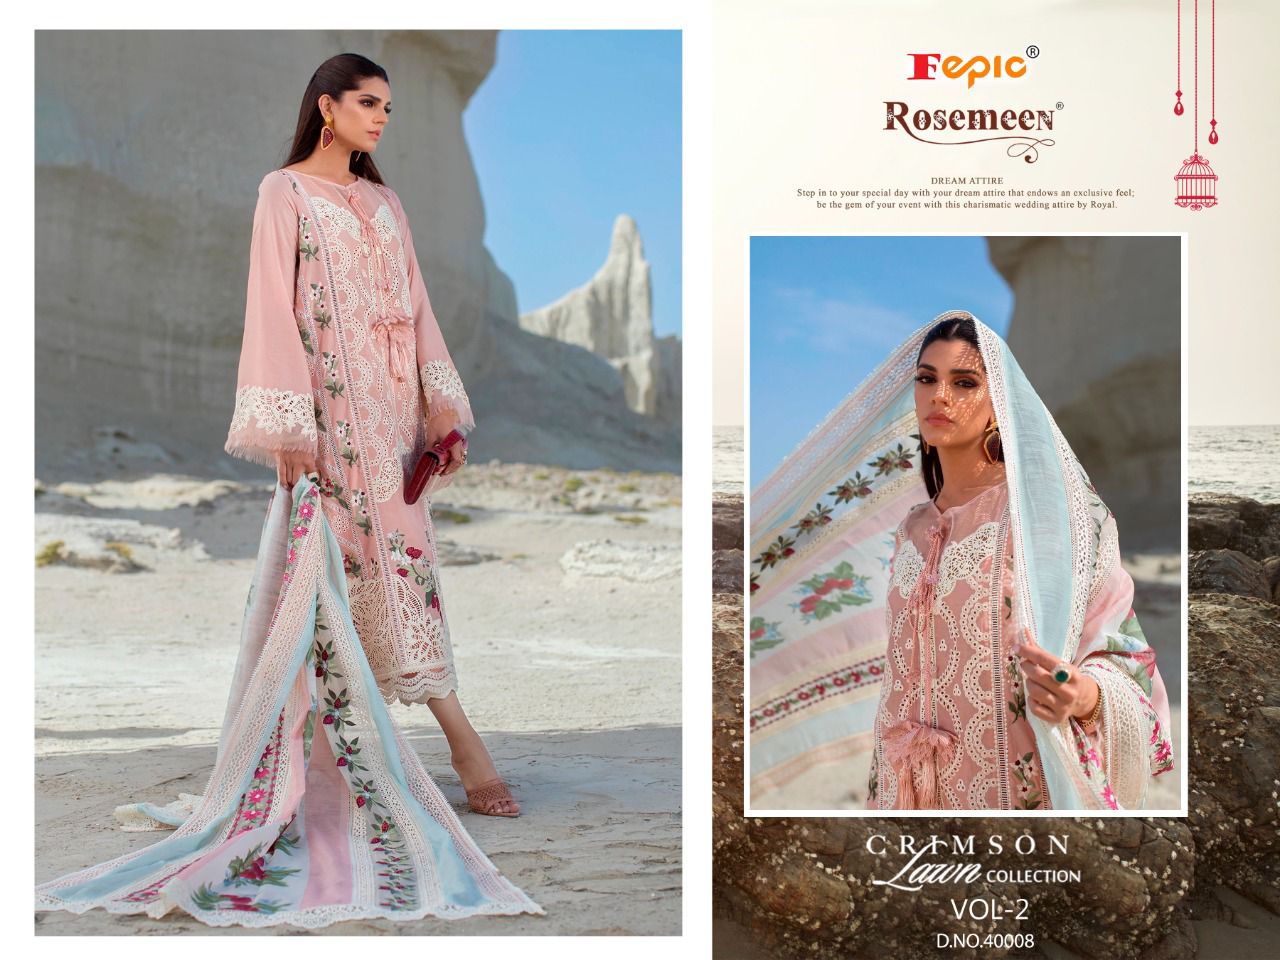 fepic rosemeen crimson lawn collection vol 2 cotton astonishing salwar suit catalog